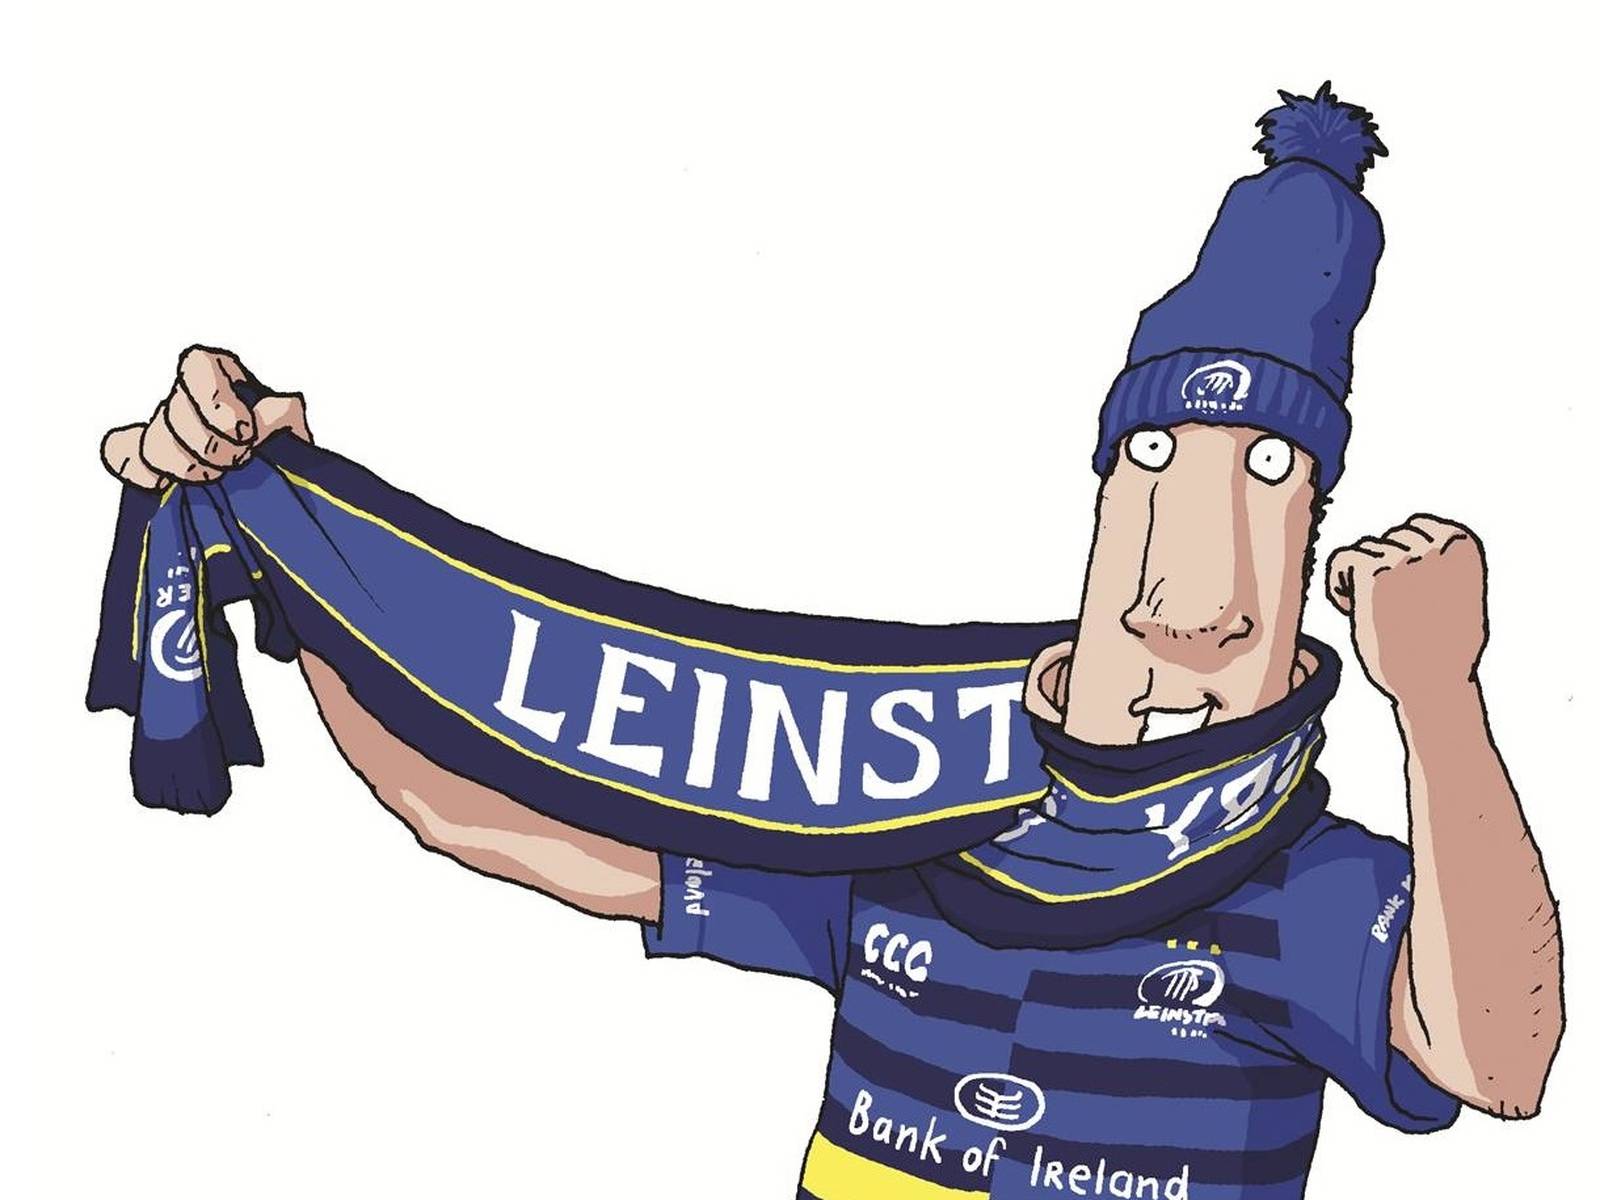 Ross O'Carroll-Kelly in his Leinster gear. Illustration: Alan Clarke